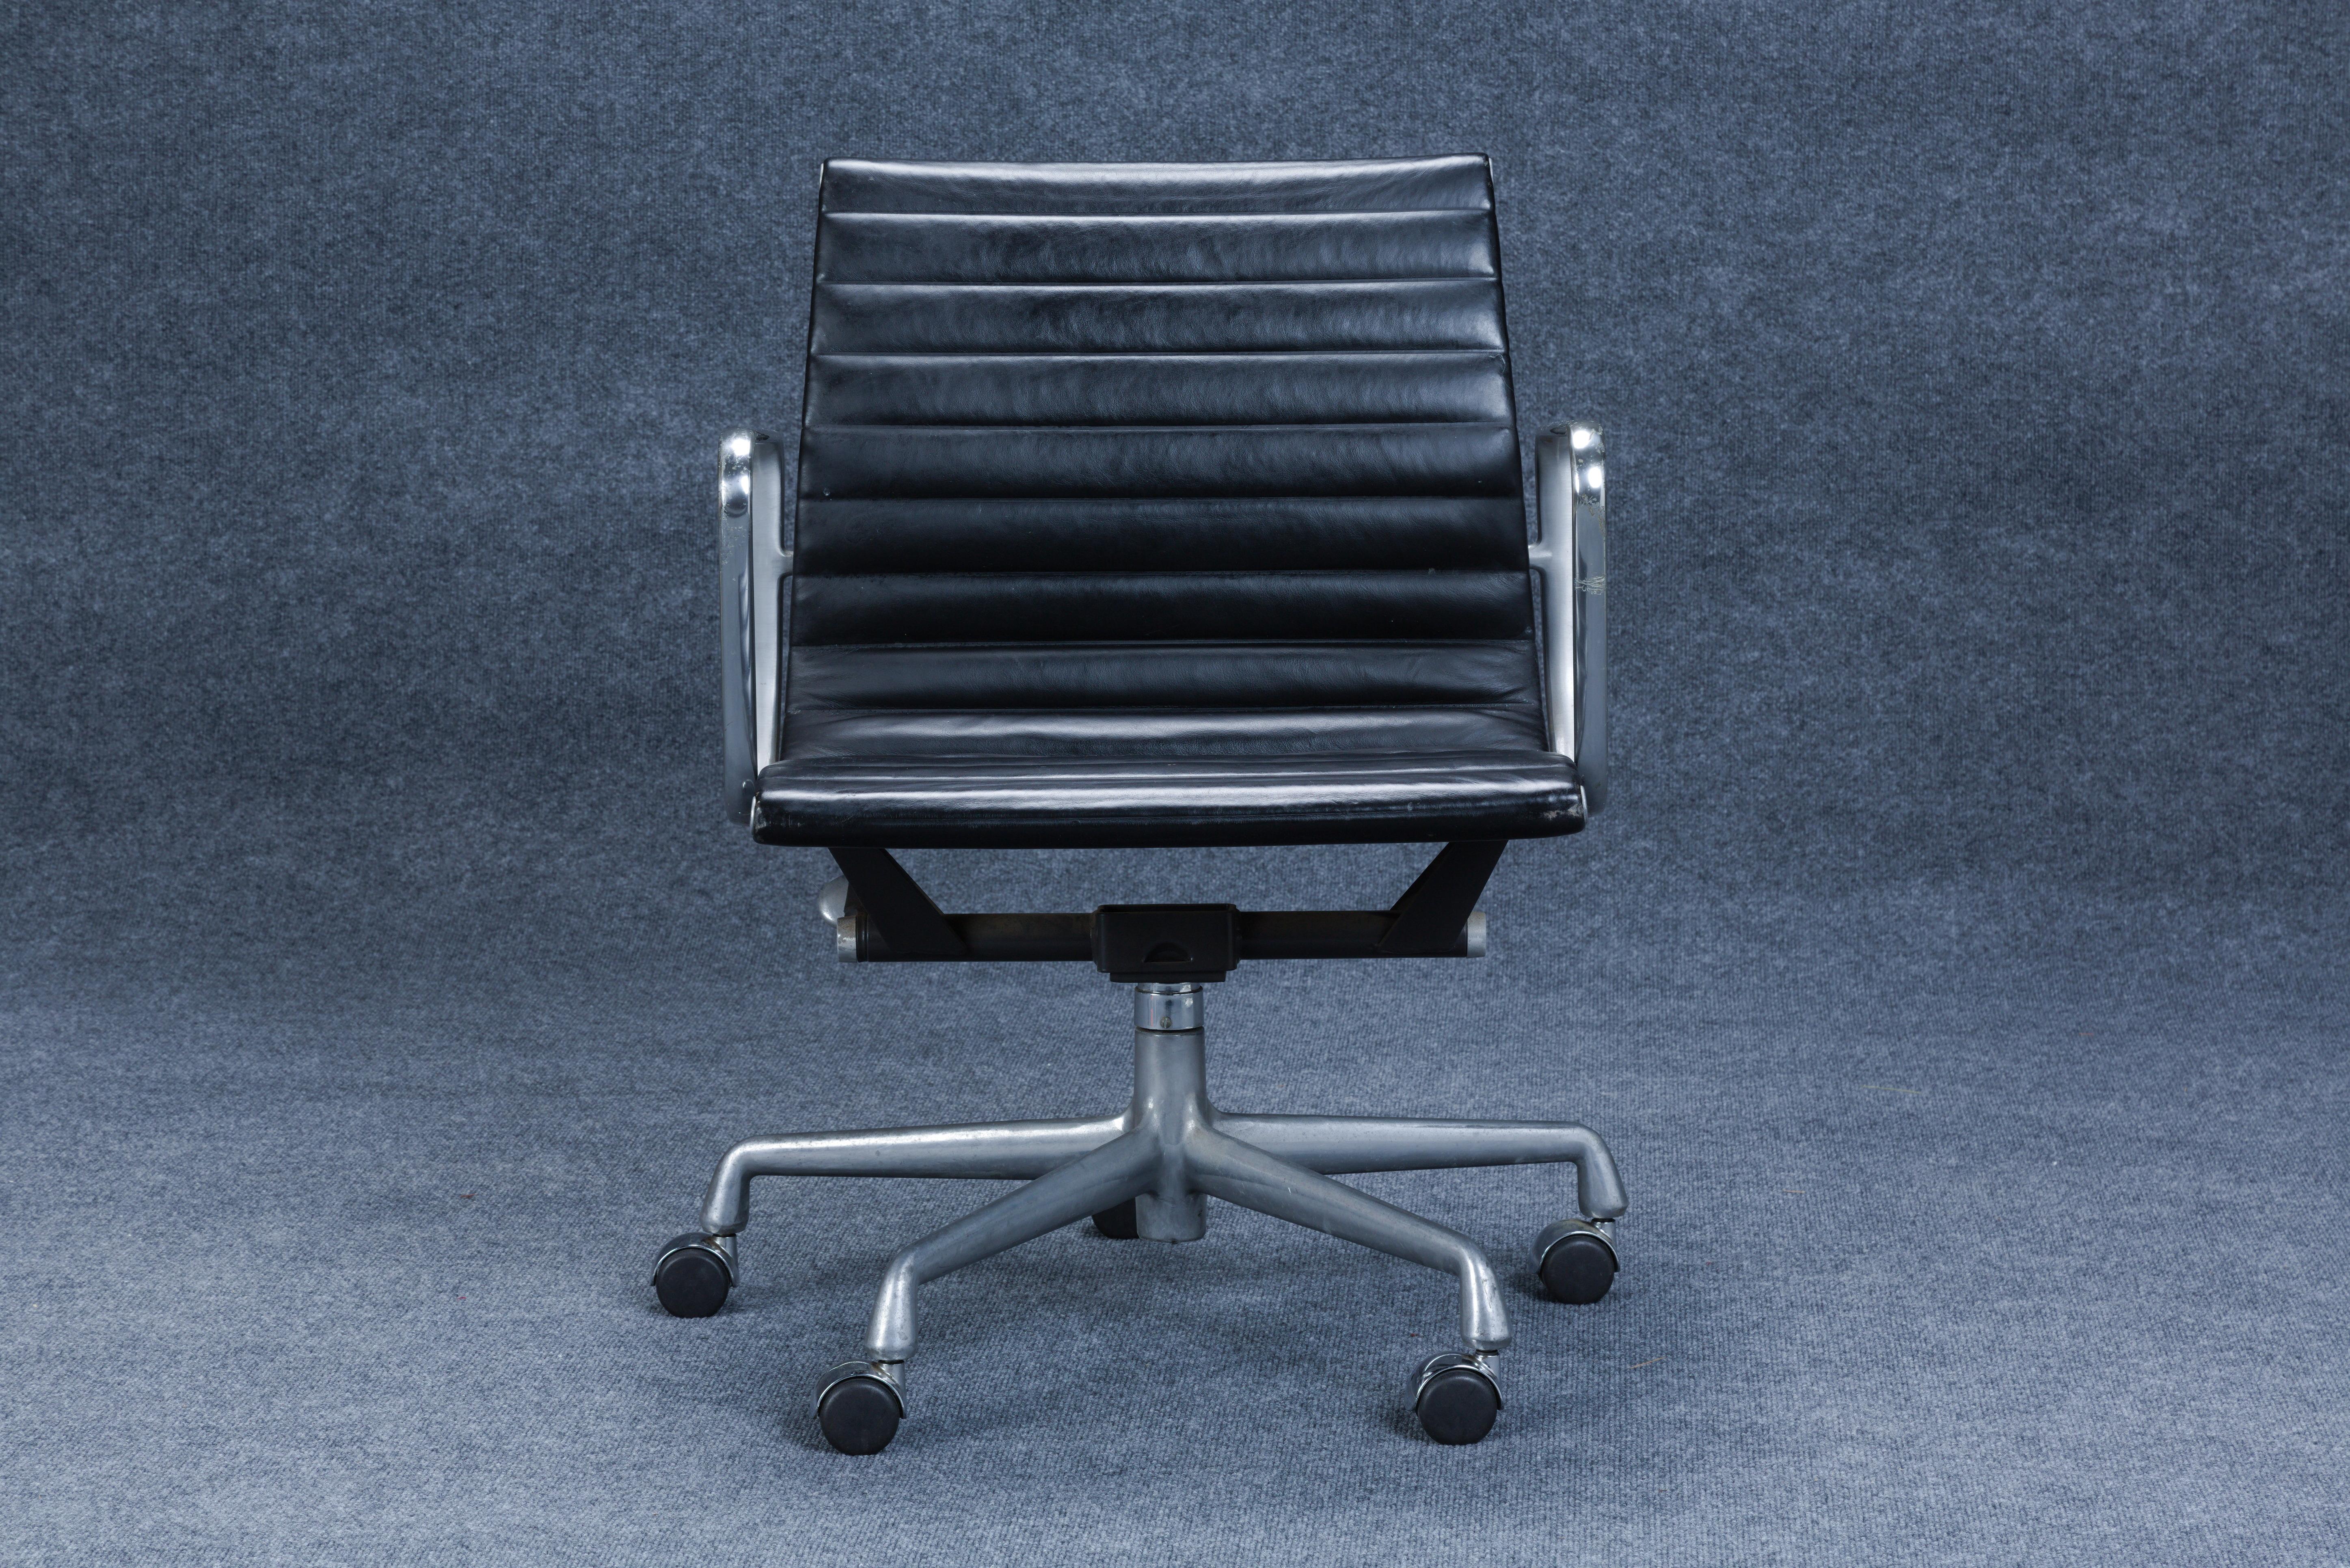 Eames Aluminum Group for Herman Miller Task Chair, Zeeland, Michigan, c. 1965, aluminum, leather, Herman Miller manufacturer's label, ht. 30, wd. 23, dp. 24 in. Seat height is adjustable between 17”-20”.

Bernice Alexandra 